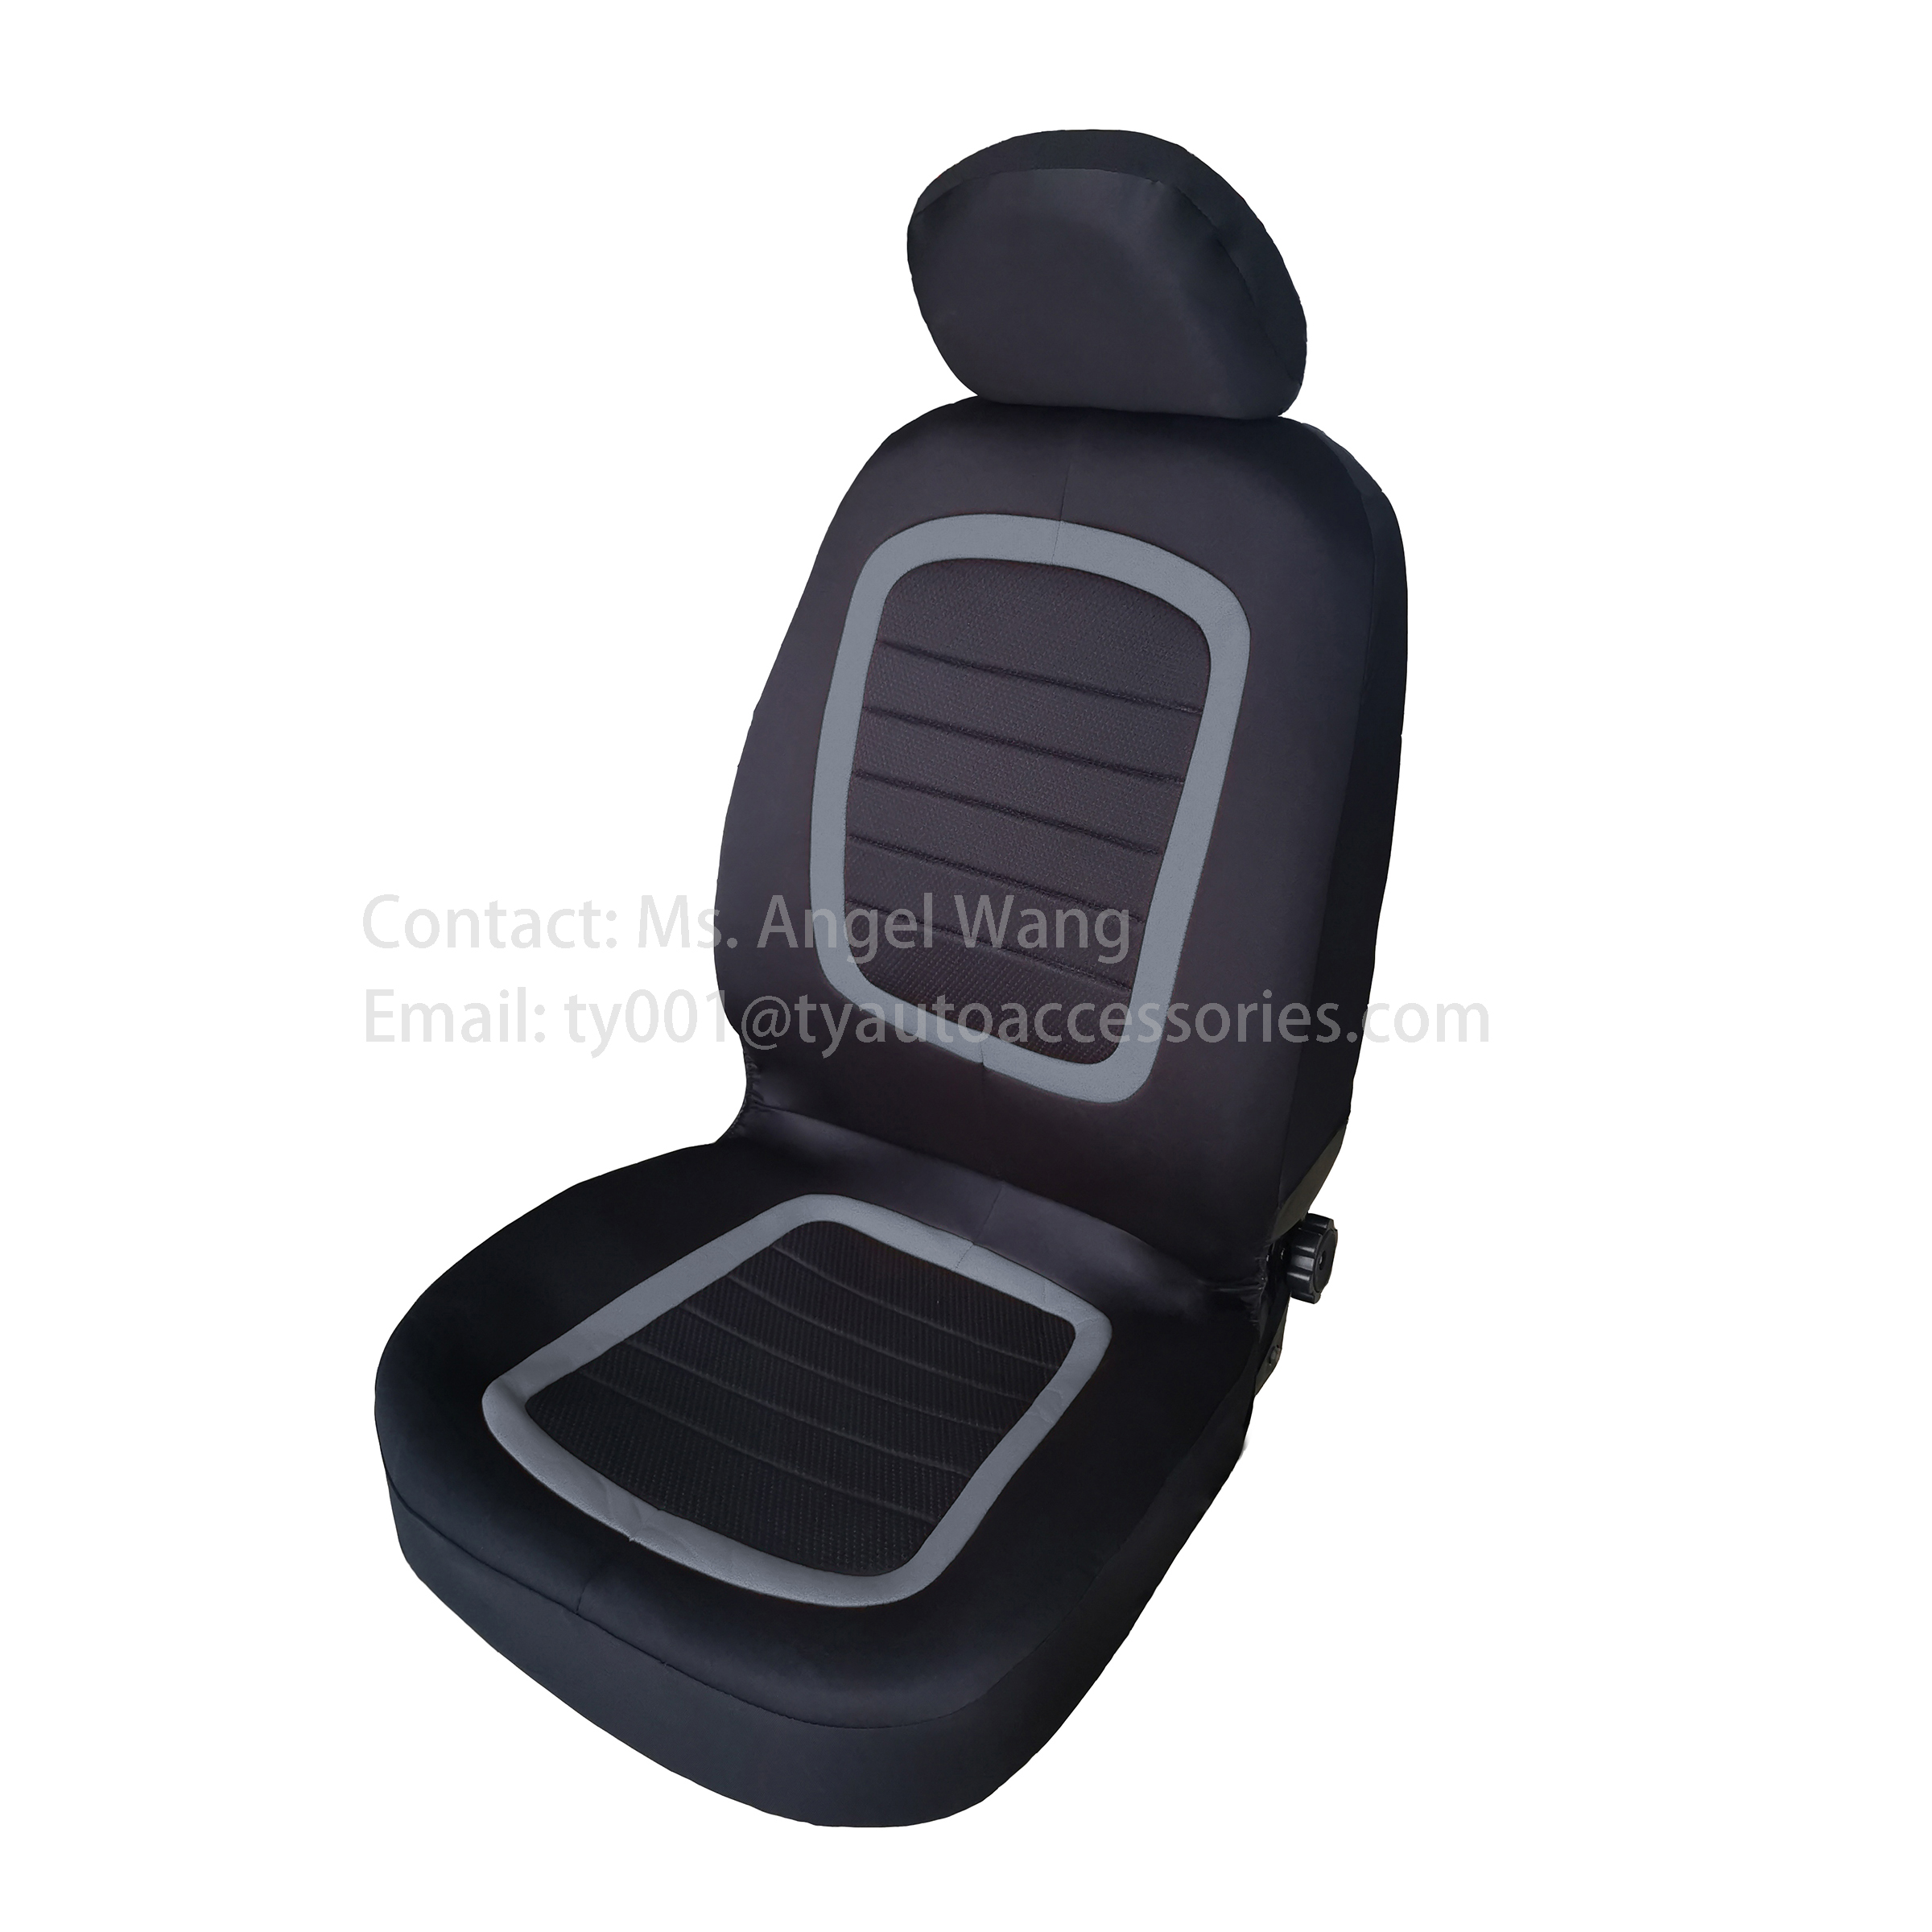 Universal size car seat cover wish ebay amanzon car seat cushion car organizer